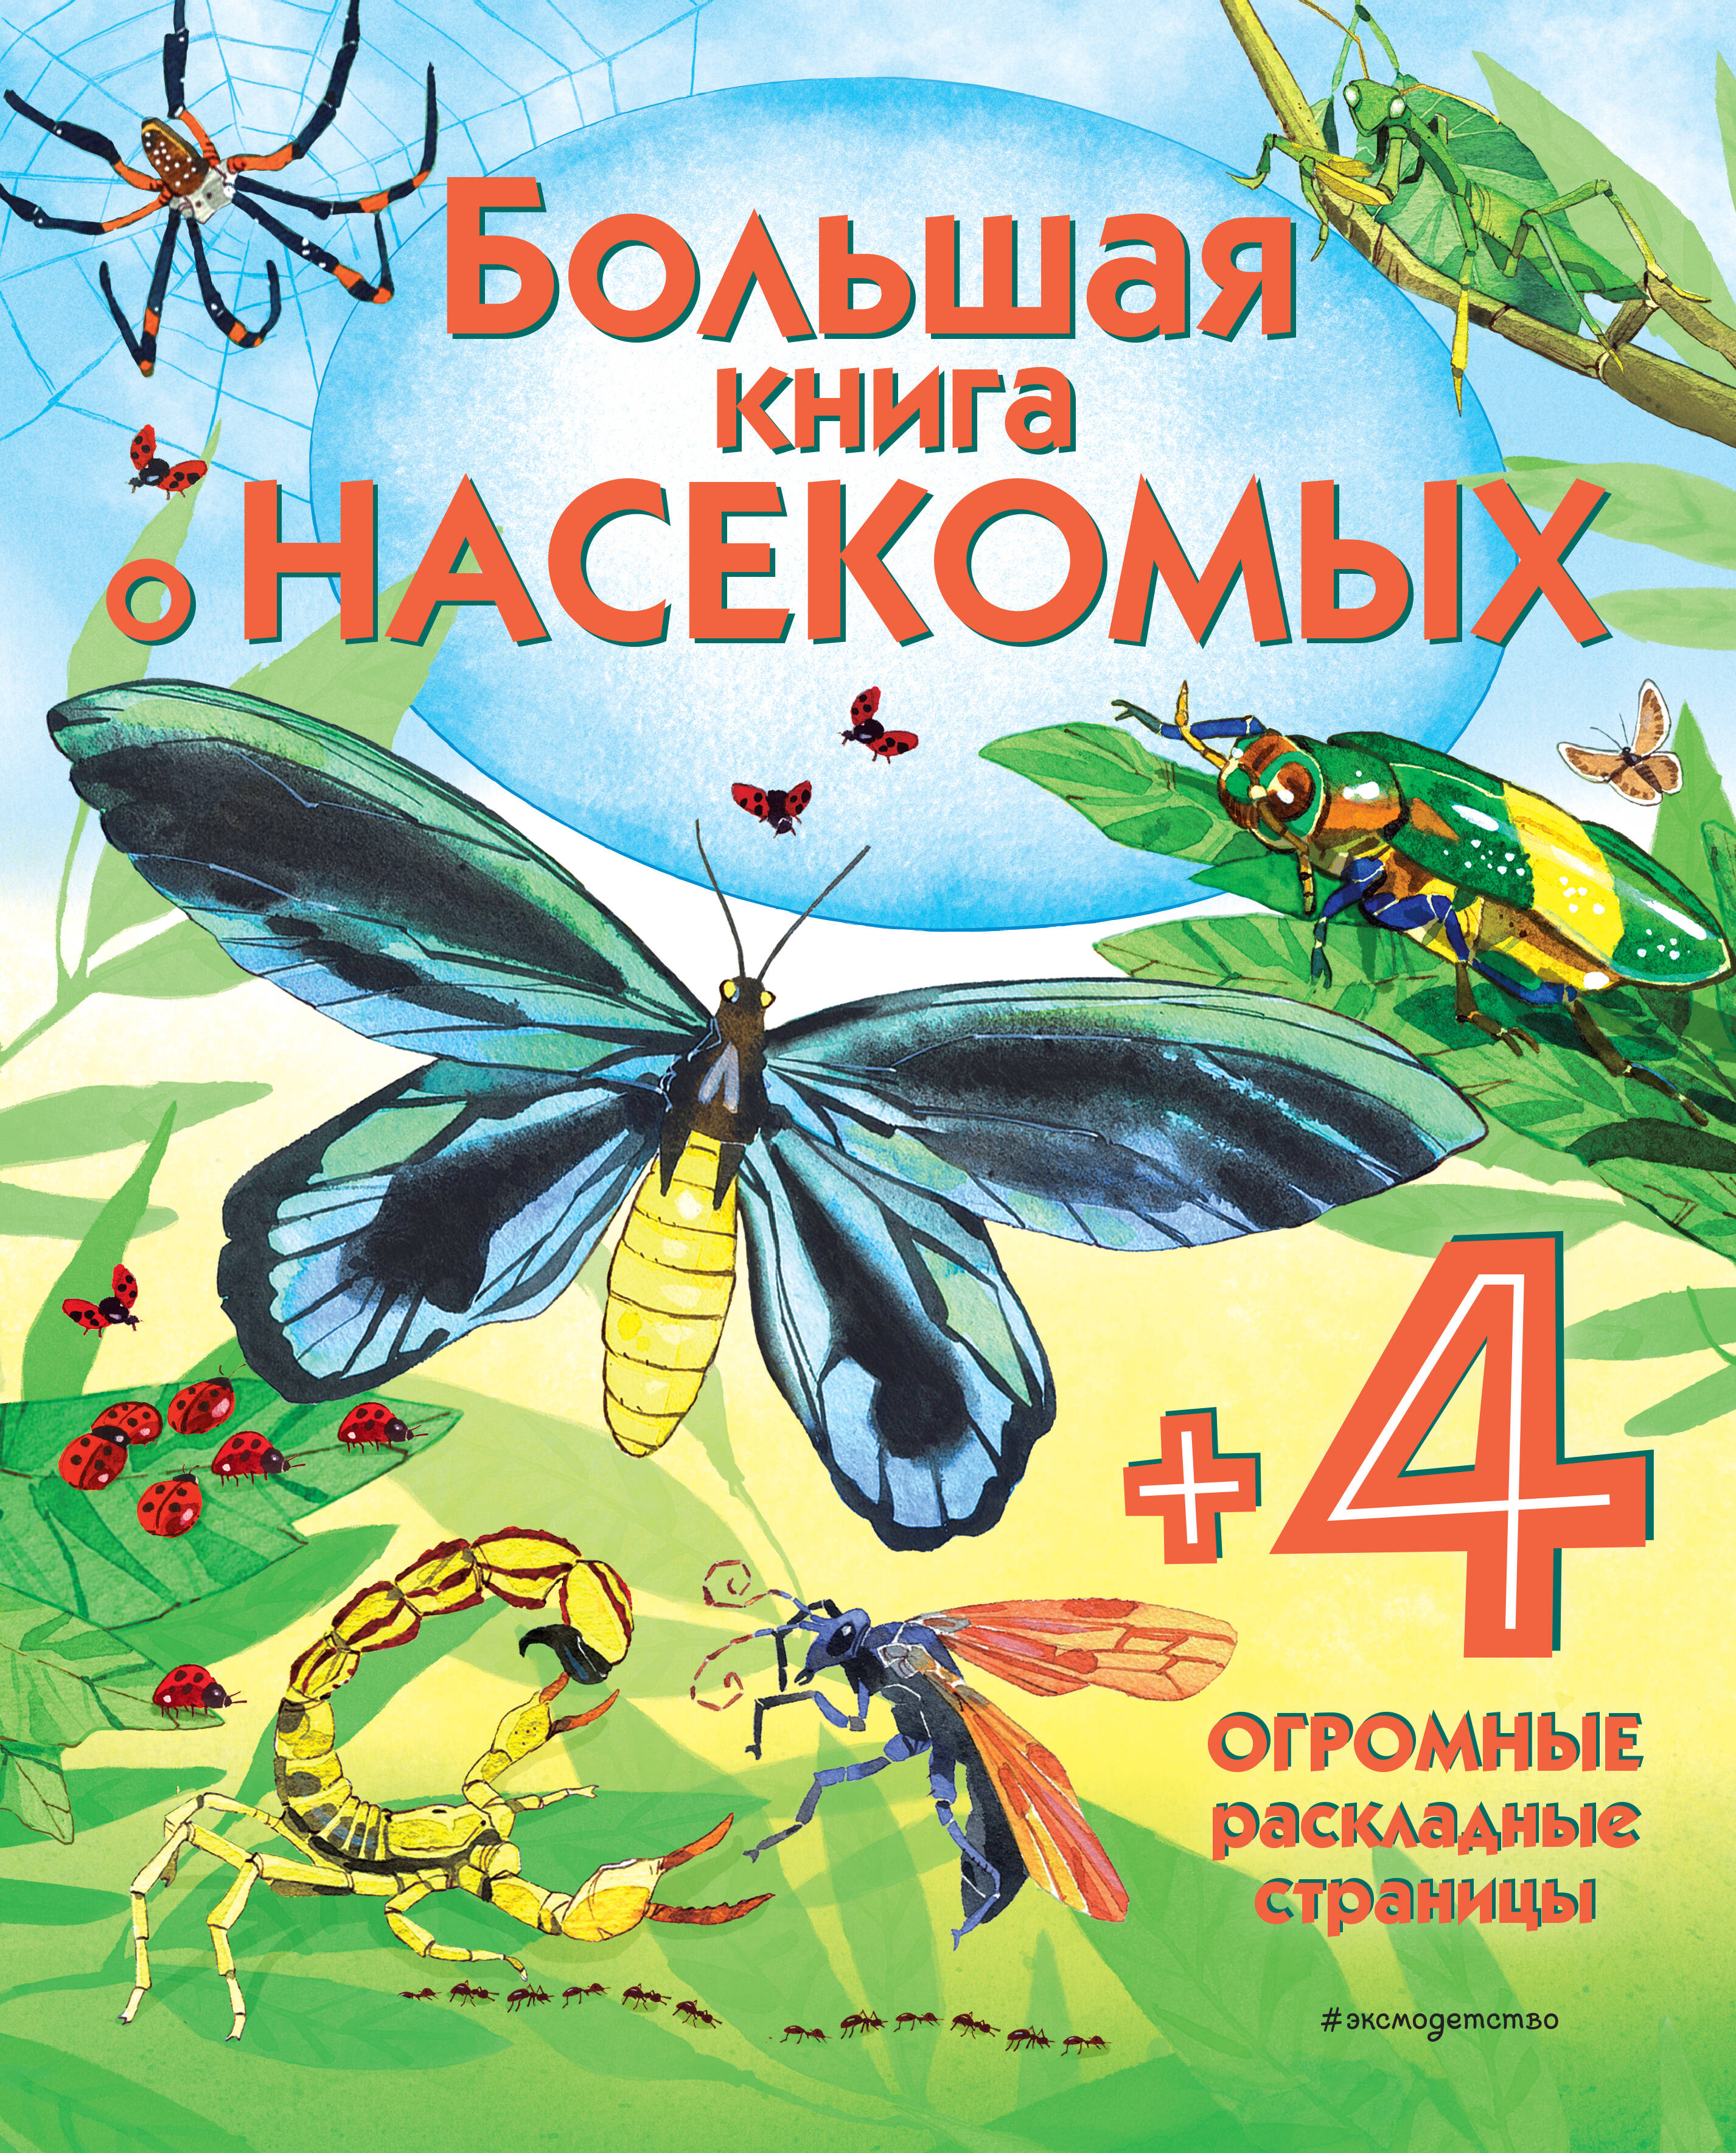 санджай ратх большая книга о накшатрах брихат накшатра Большая книга о насекомых